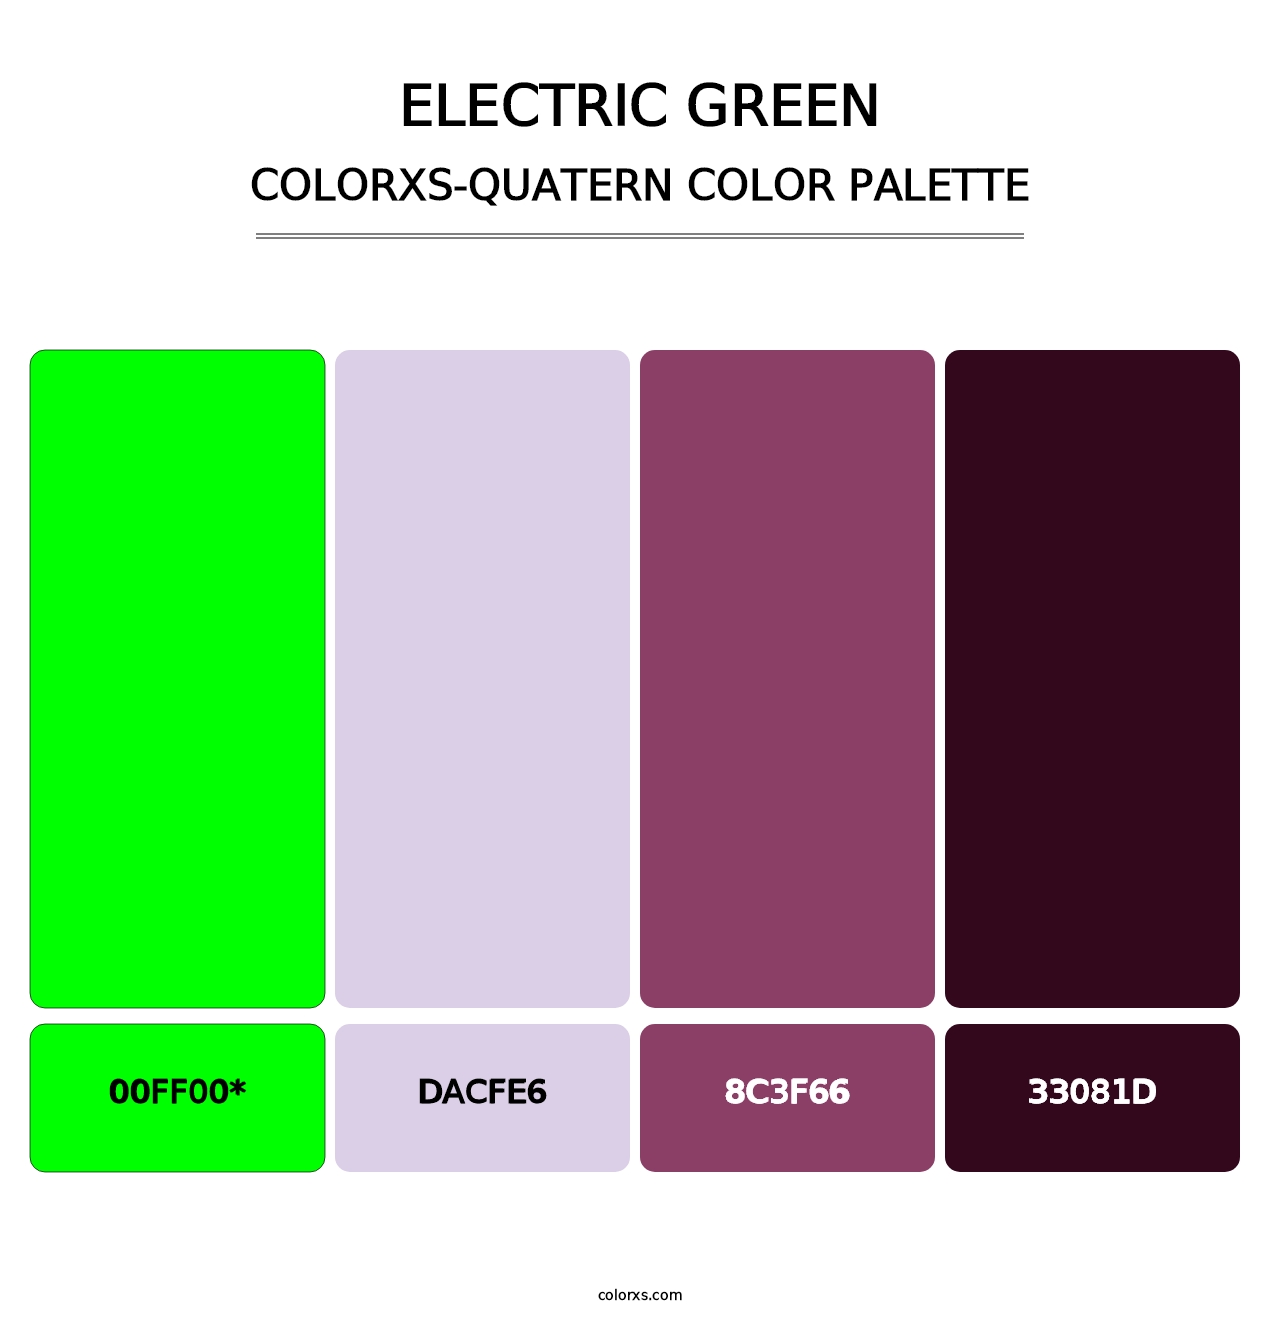 Electric Green - Colorxs Quatern Palette